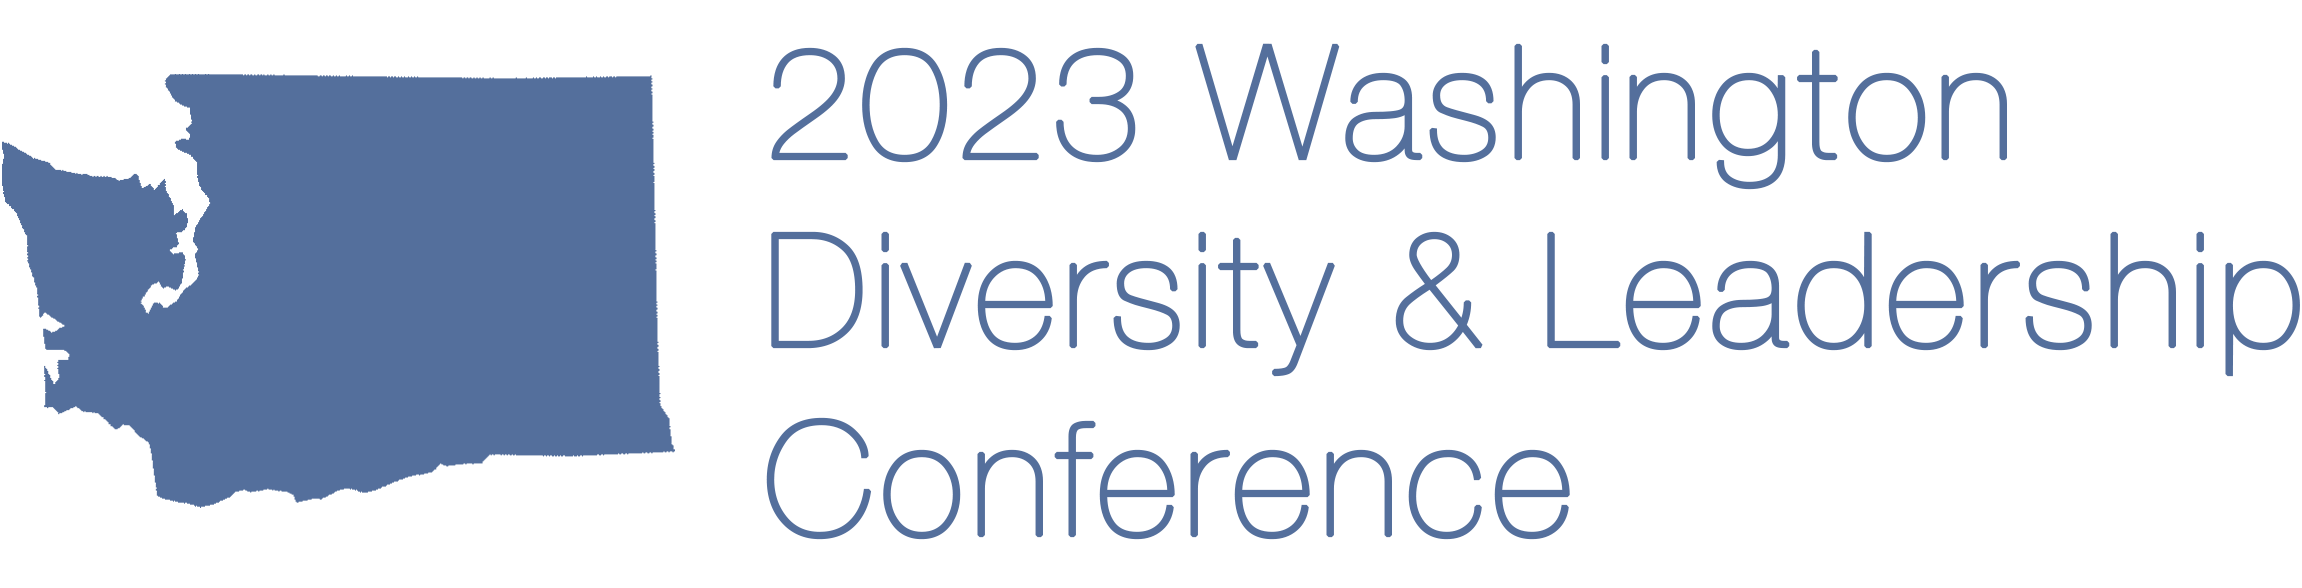 2023 Washington Diversity & Leadership Conference (Virtual)